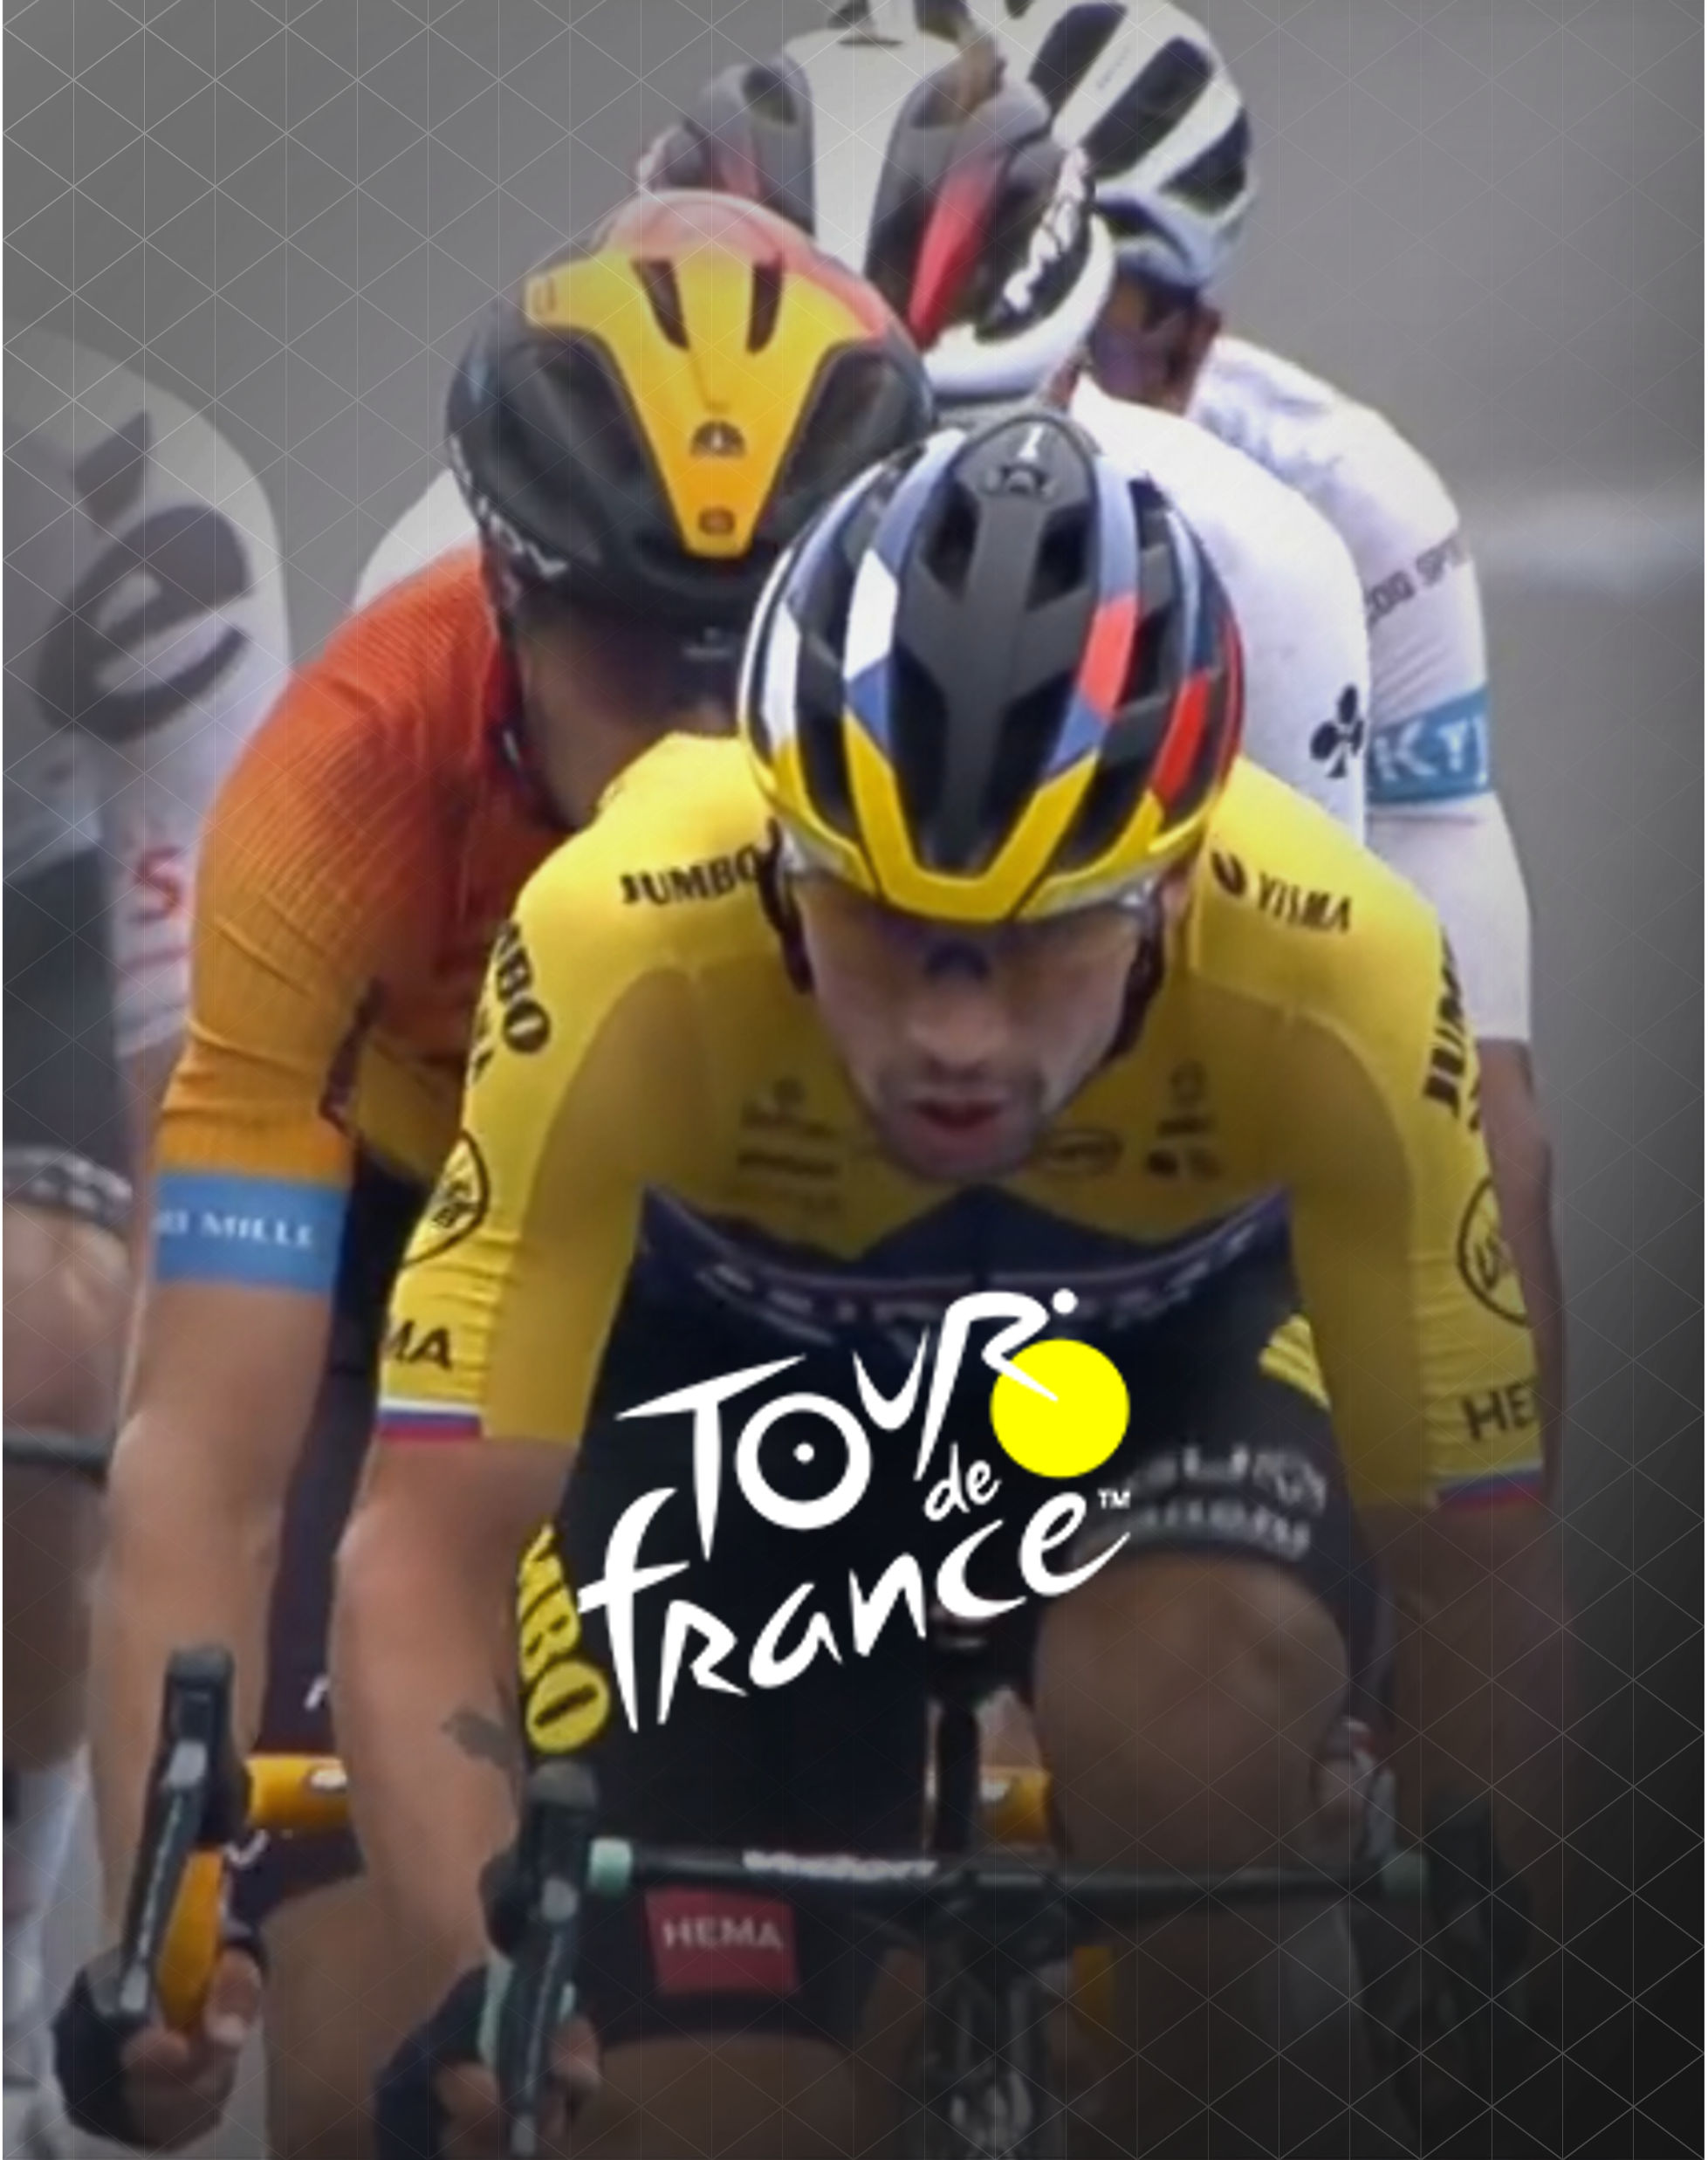 NTT Global – Tour de France data stories